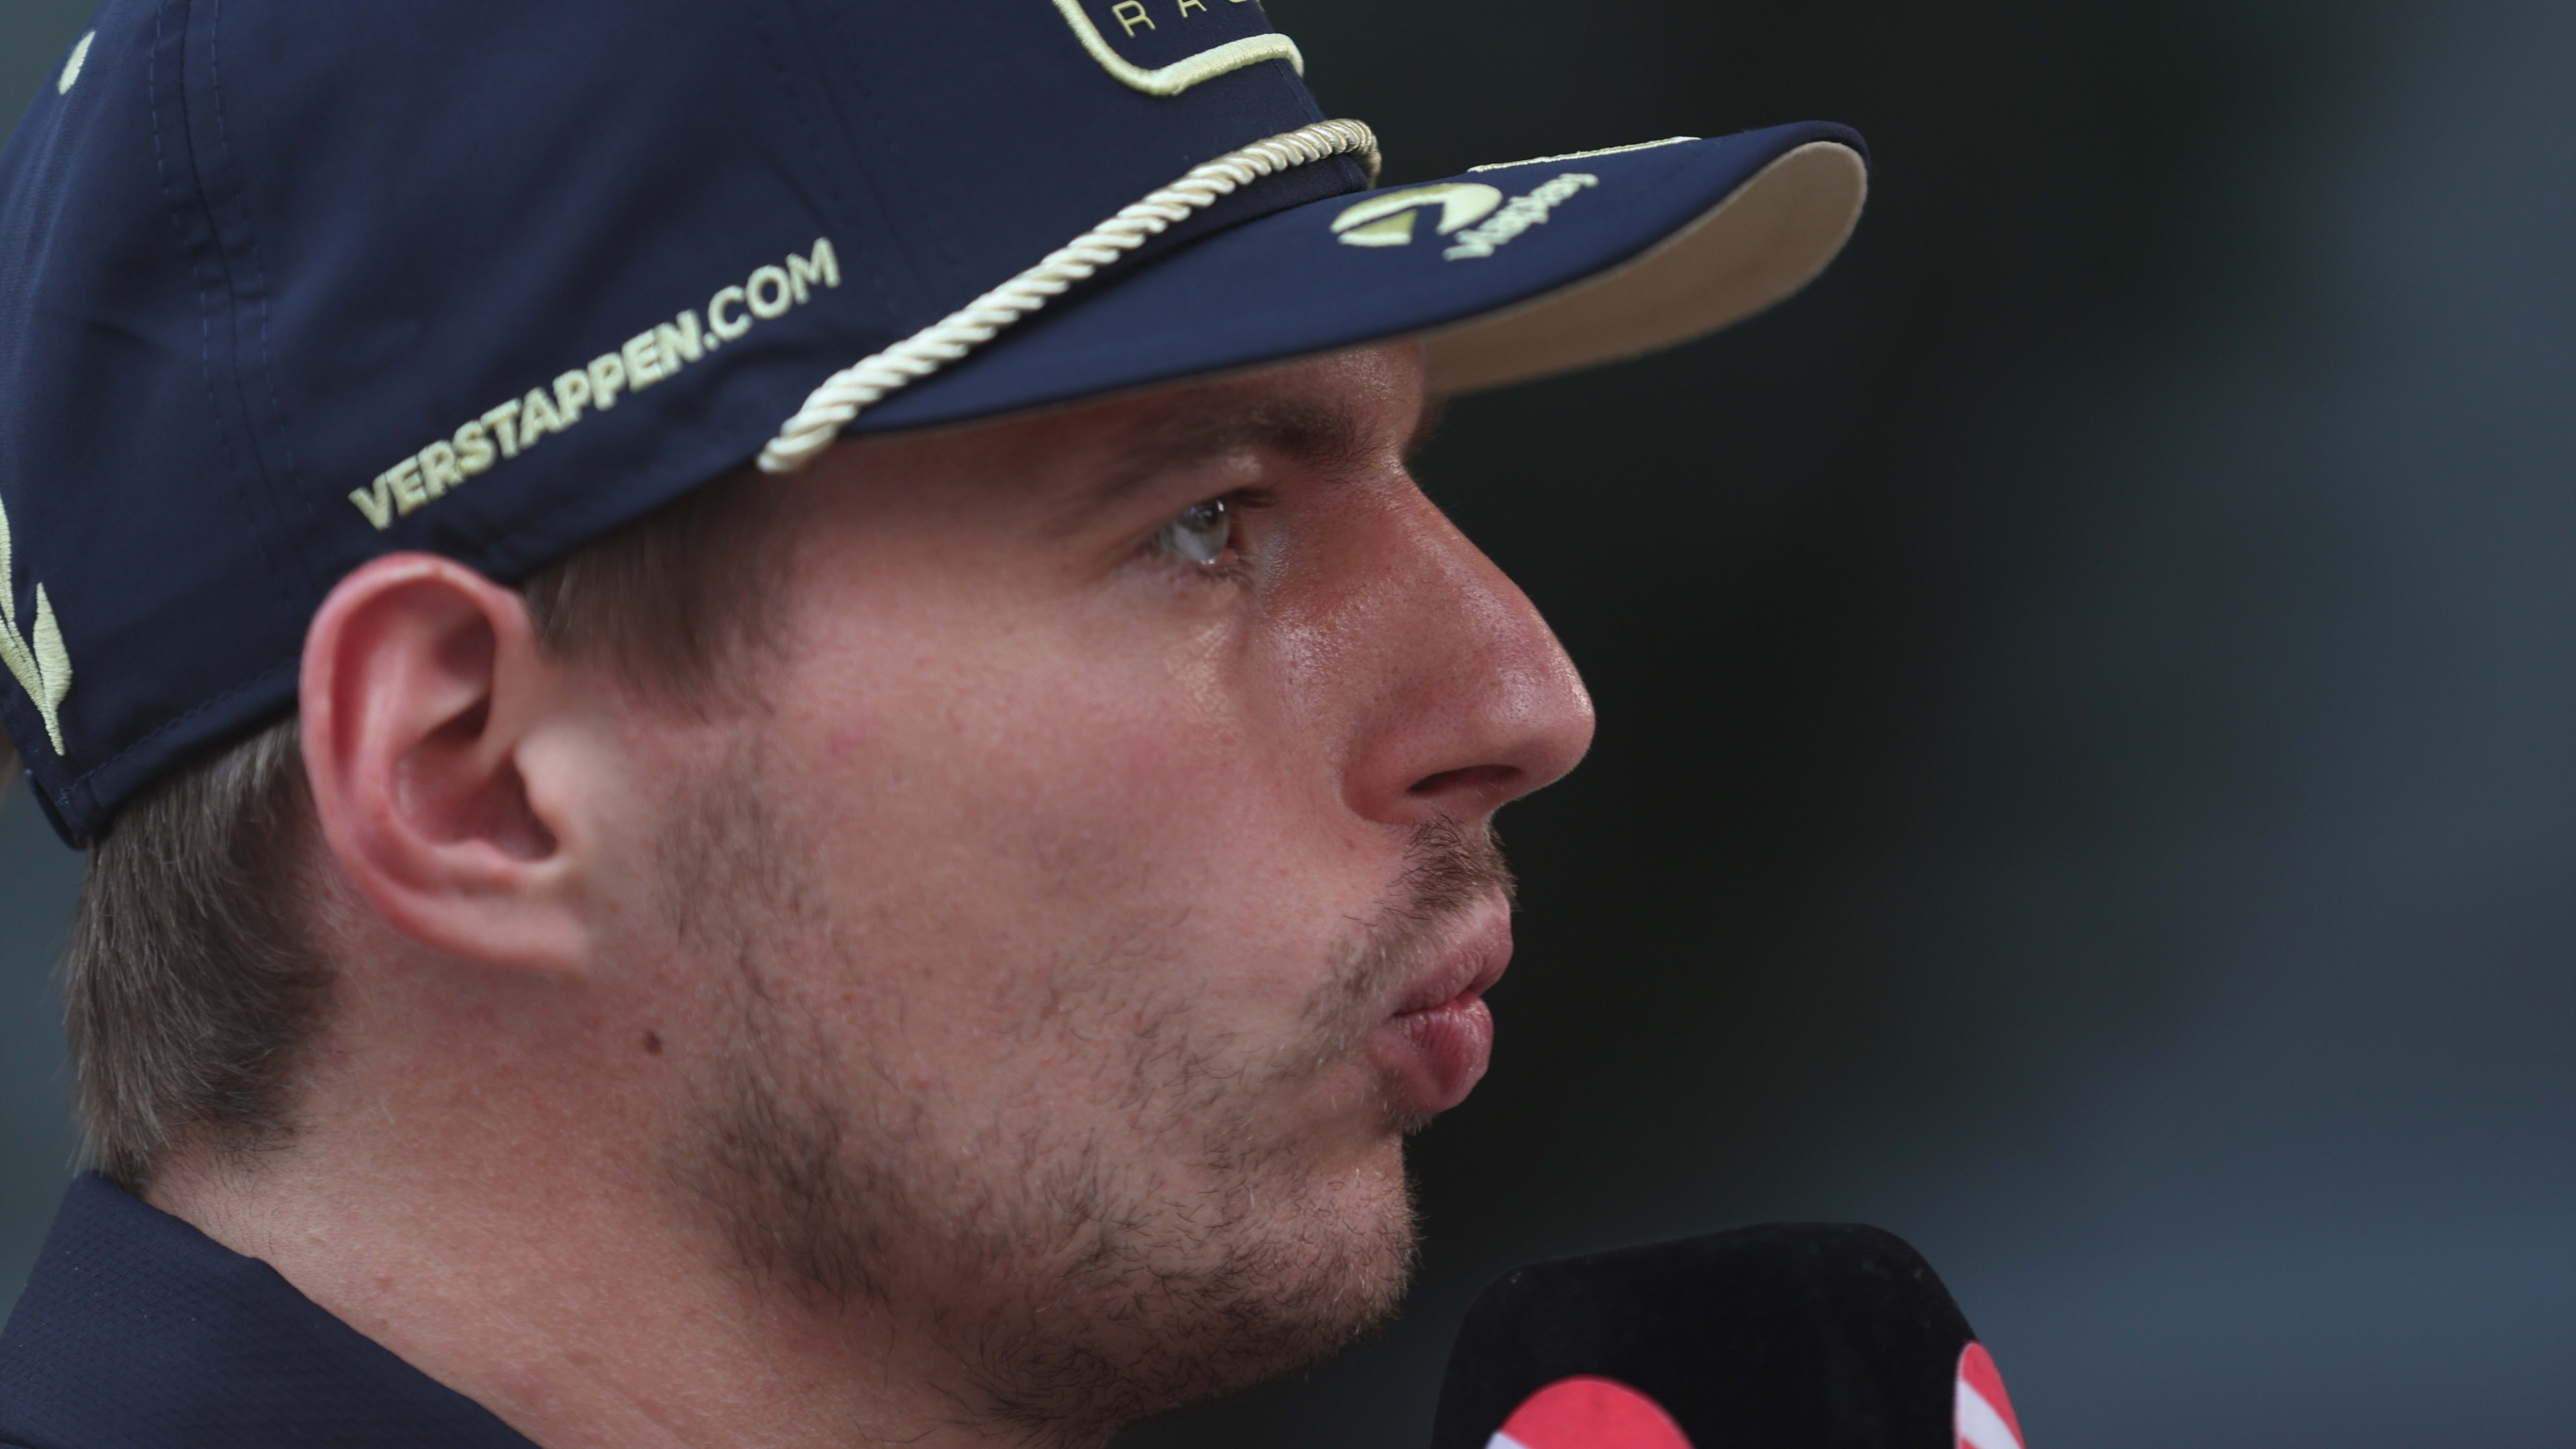 Onverslaanbaar: wereldkampioen Max Verstappen wint in Qatar